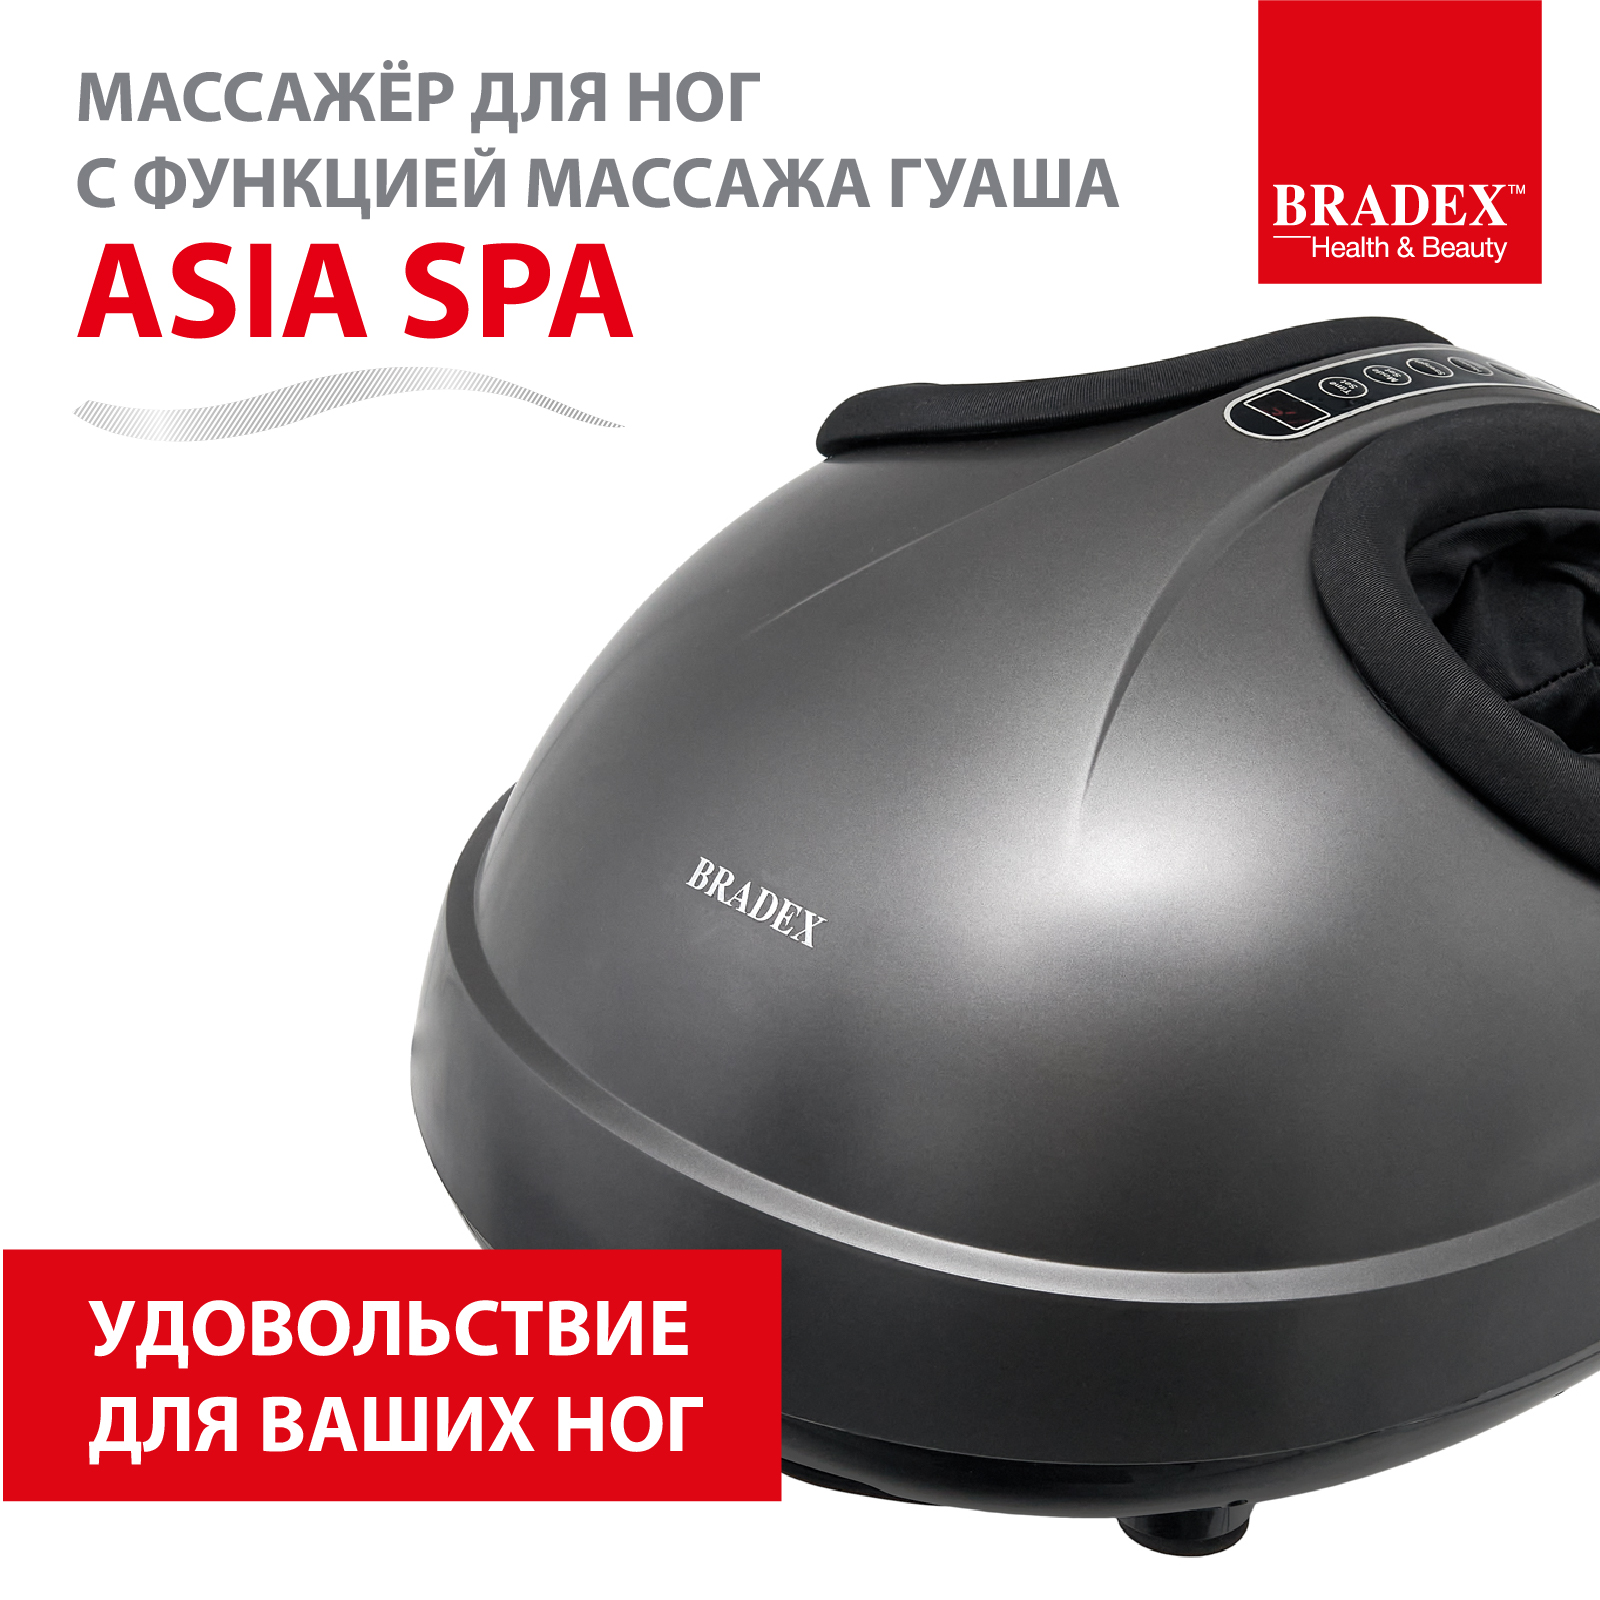 Массажёр Bradex KZ 0570 - купить в Москве, цены на Мегамаркет | 100027328505